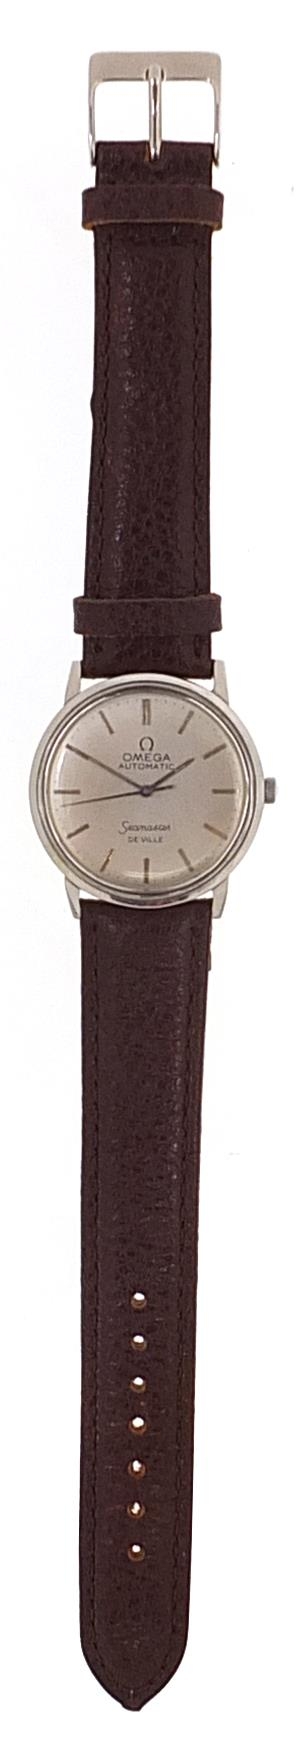 Omega, vintage gentlemen's Omega Deville Seamaster automatic wristwatch, 33mm in diameter - Image 2 of 6